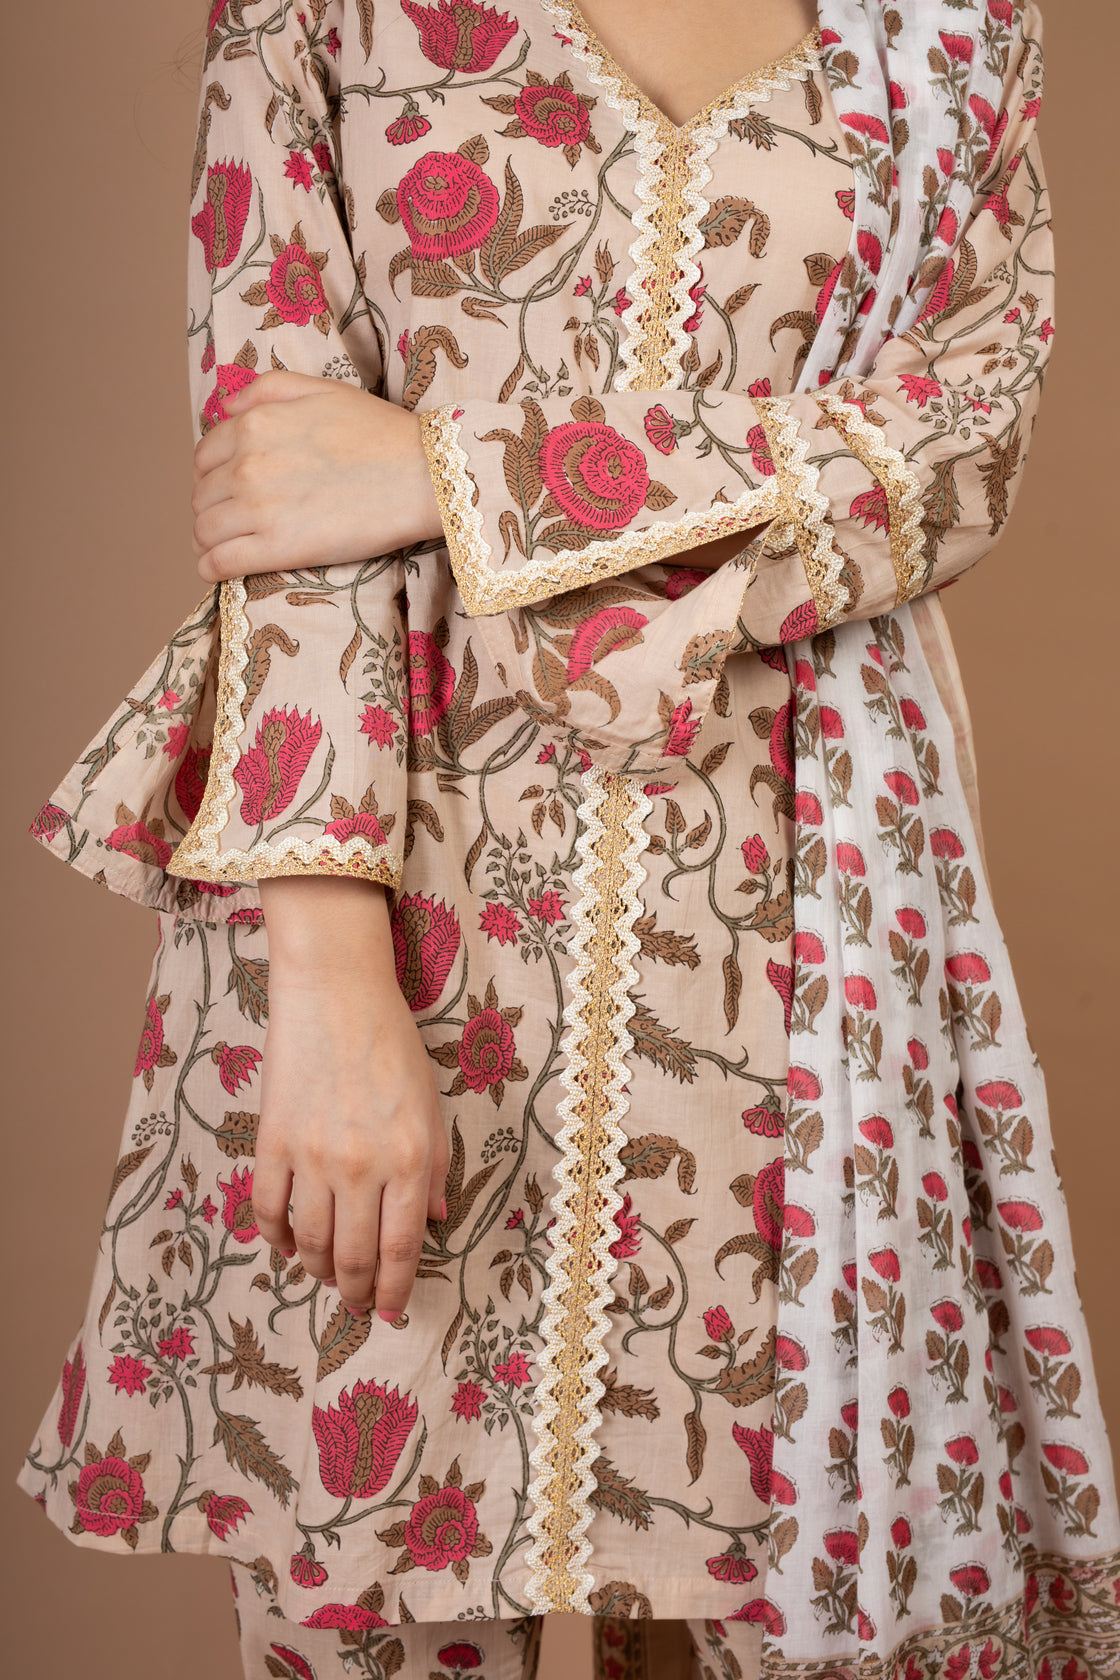 Tisya- Adaara Beiege and pink Floral Print Suit Set with Lace detailing - Adaara